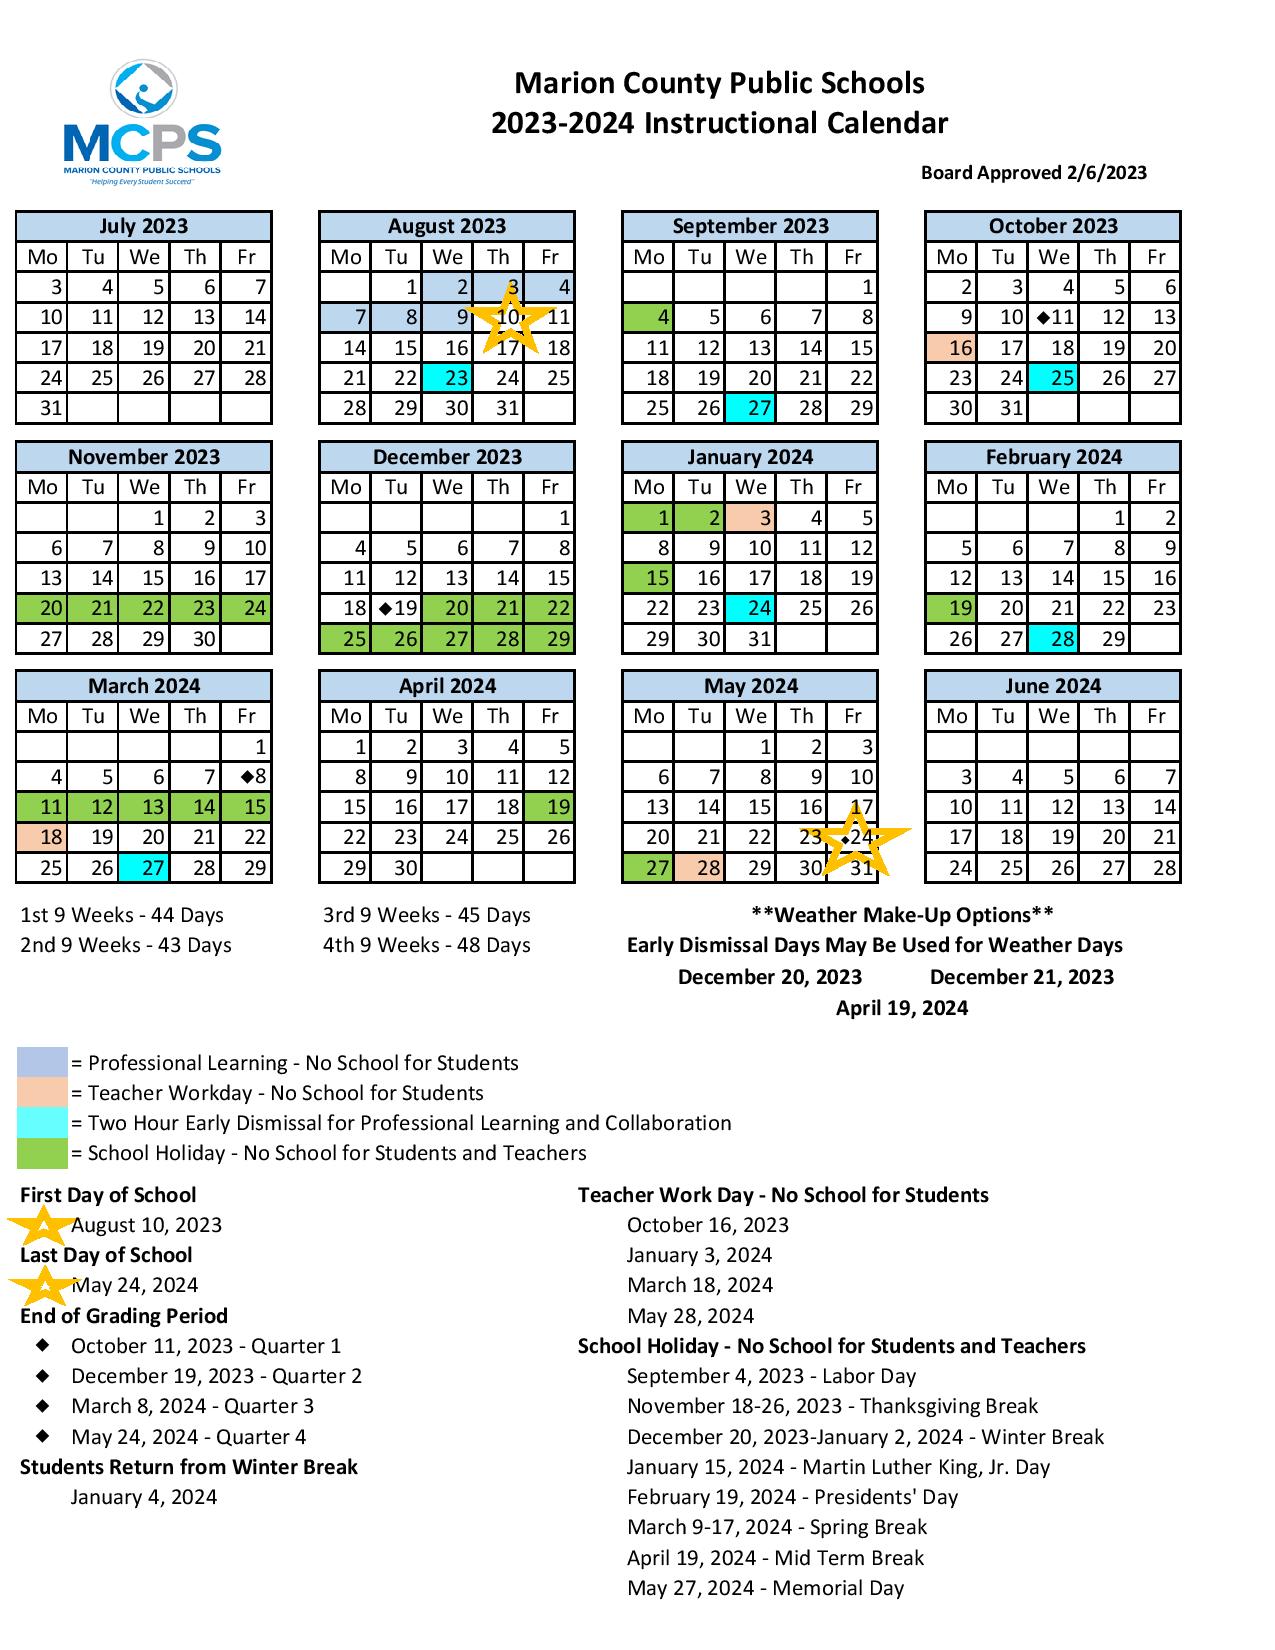 Marion County Public Schools Calendar Holidays 20232024